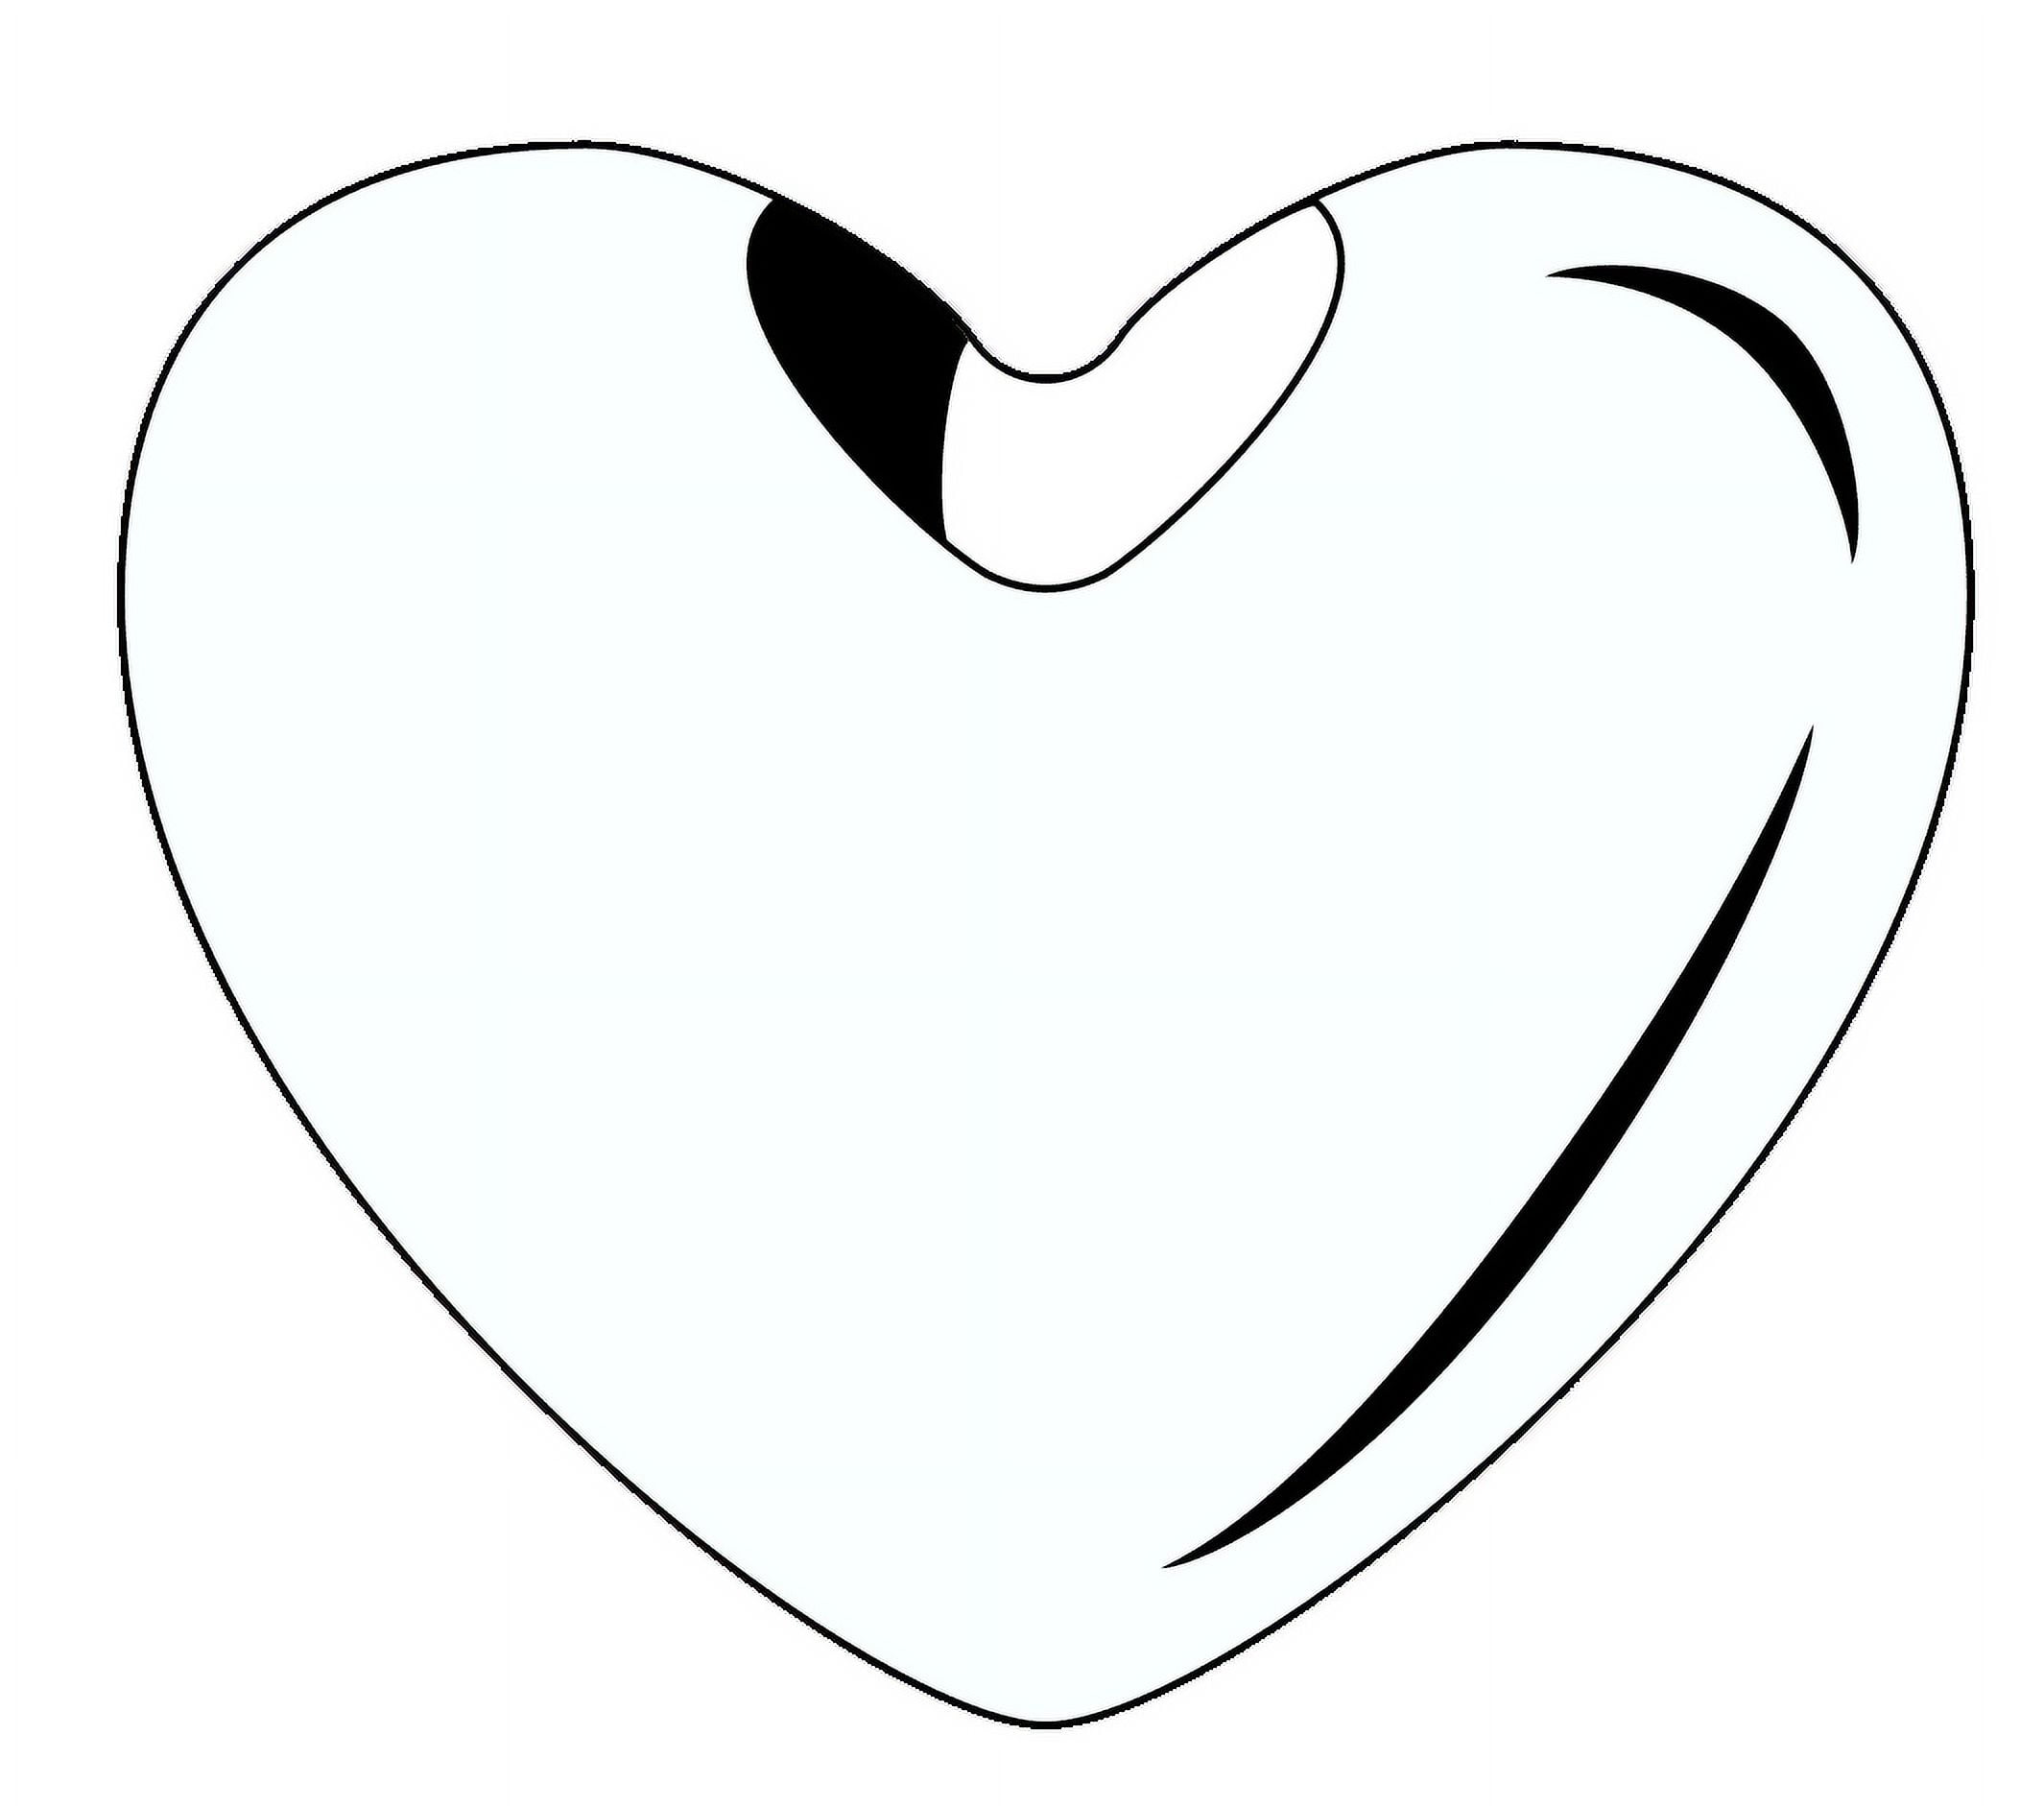 Xpresssionz Valentine Heart keychain-Heart Shape Pony Bead keychain-Heart Keychain Tag-Pony Bead Heart Travel Tag- Heart Luggage label-heart Bag ID-Love